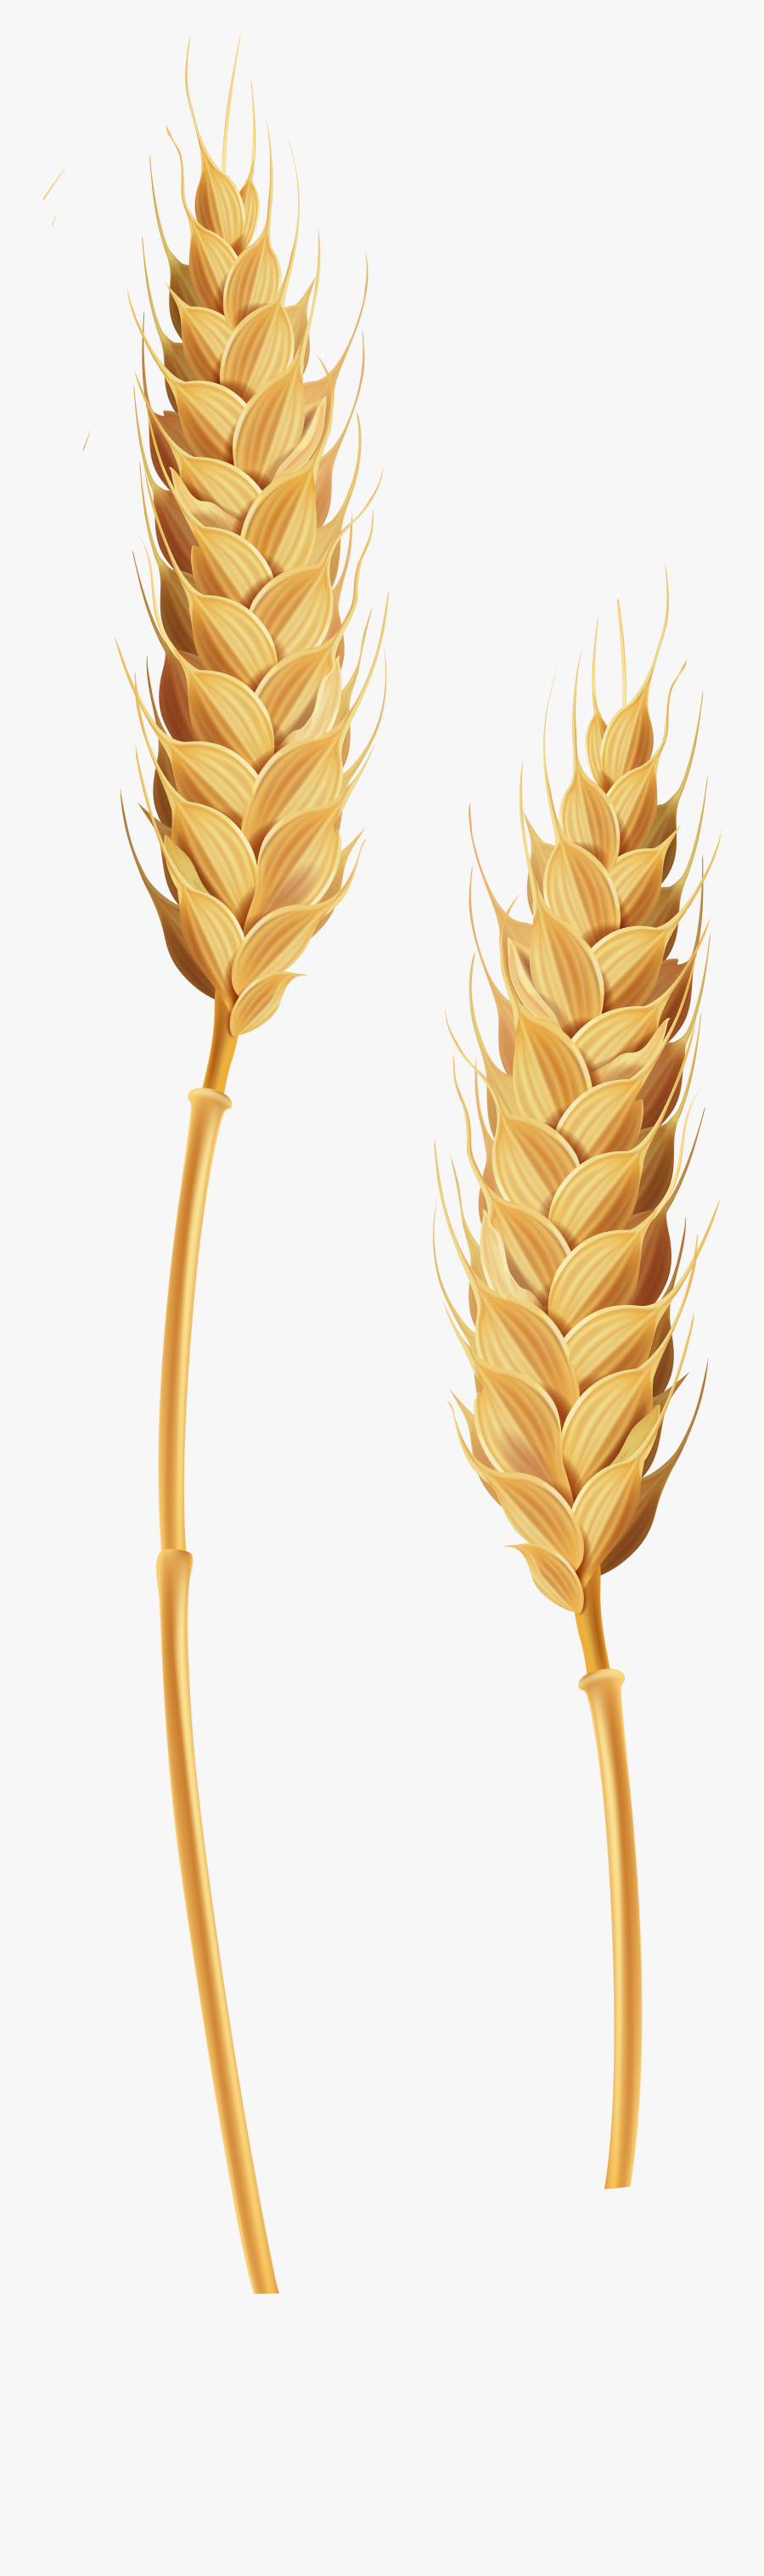 Wheat Stalk Png, Transparent Clipart